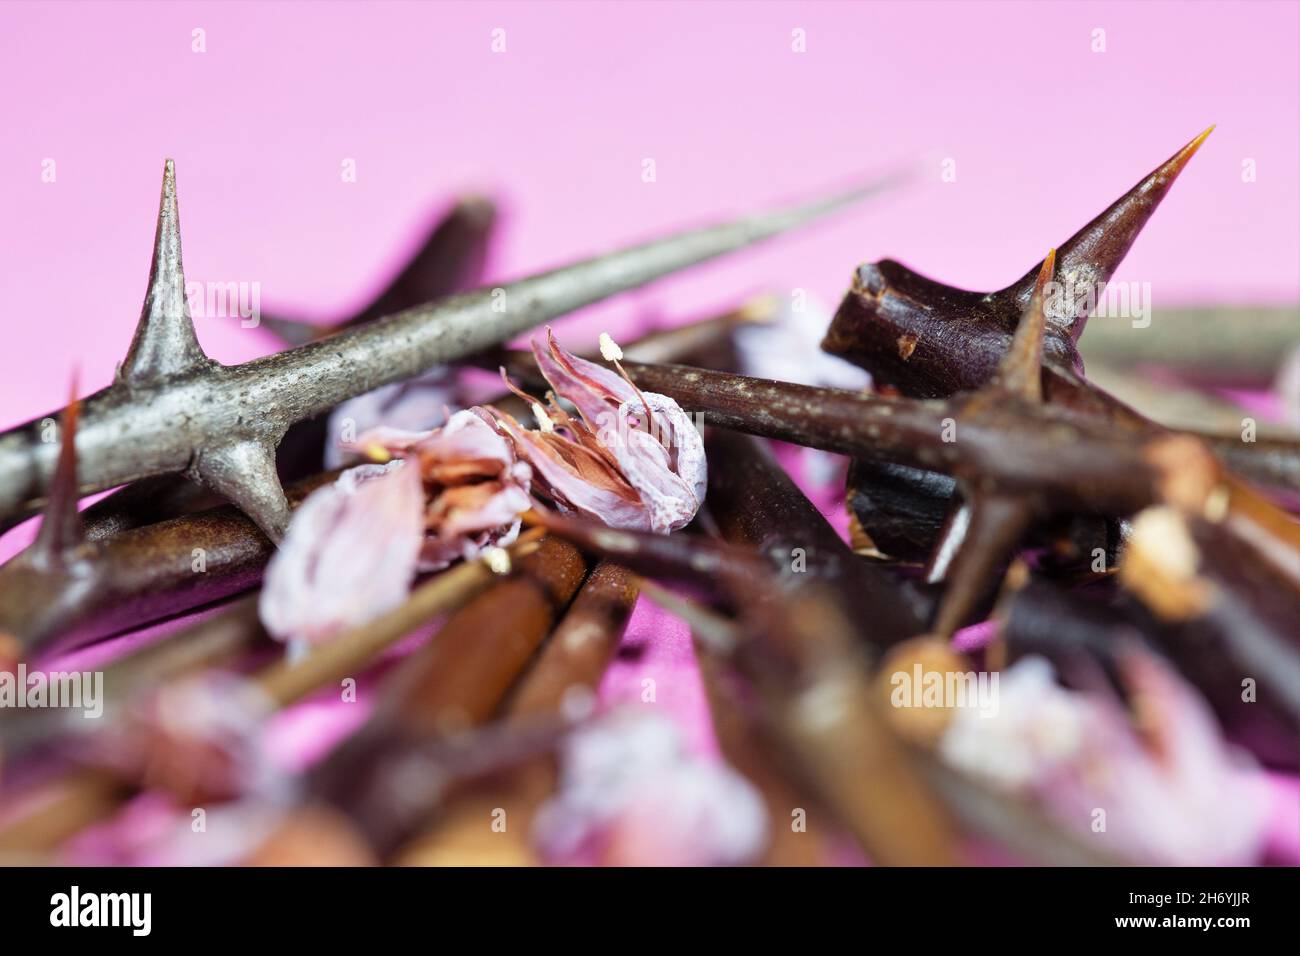 Honey locust thorns and echeveria flowers on pink. Stock Photo